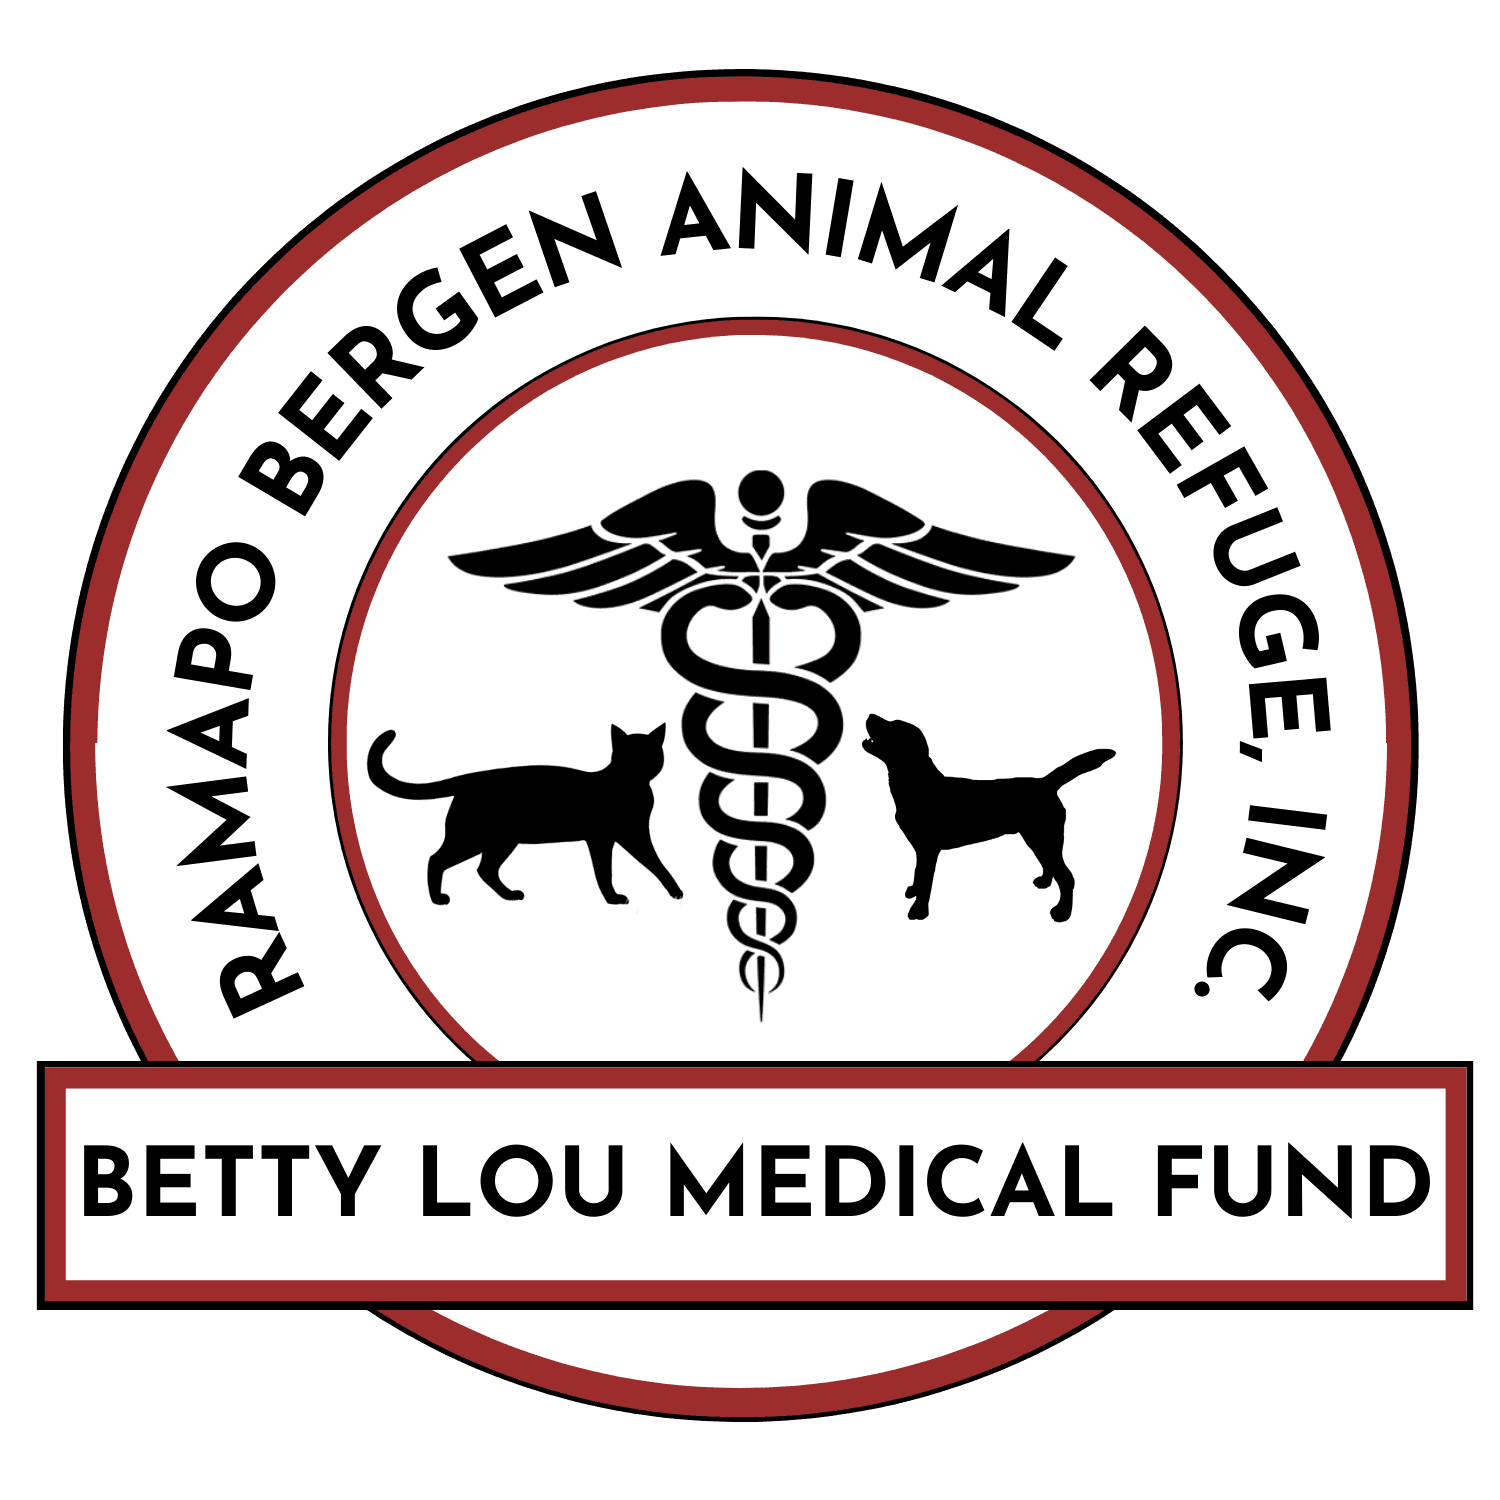 Betty Lou Medical Fund : Donate : Ramapo-Bergen Animal Refuge, Inc.